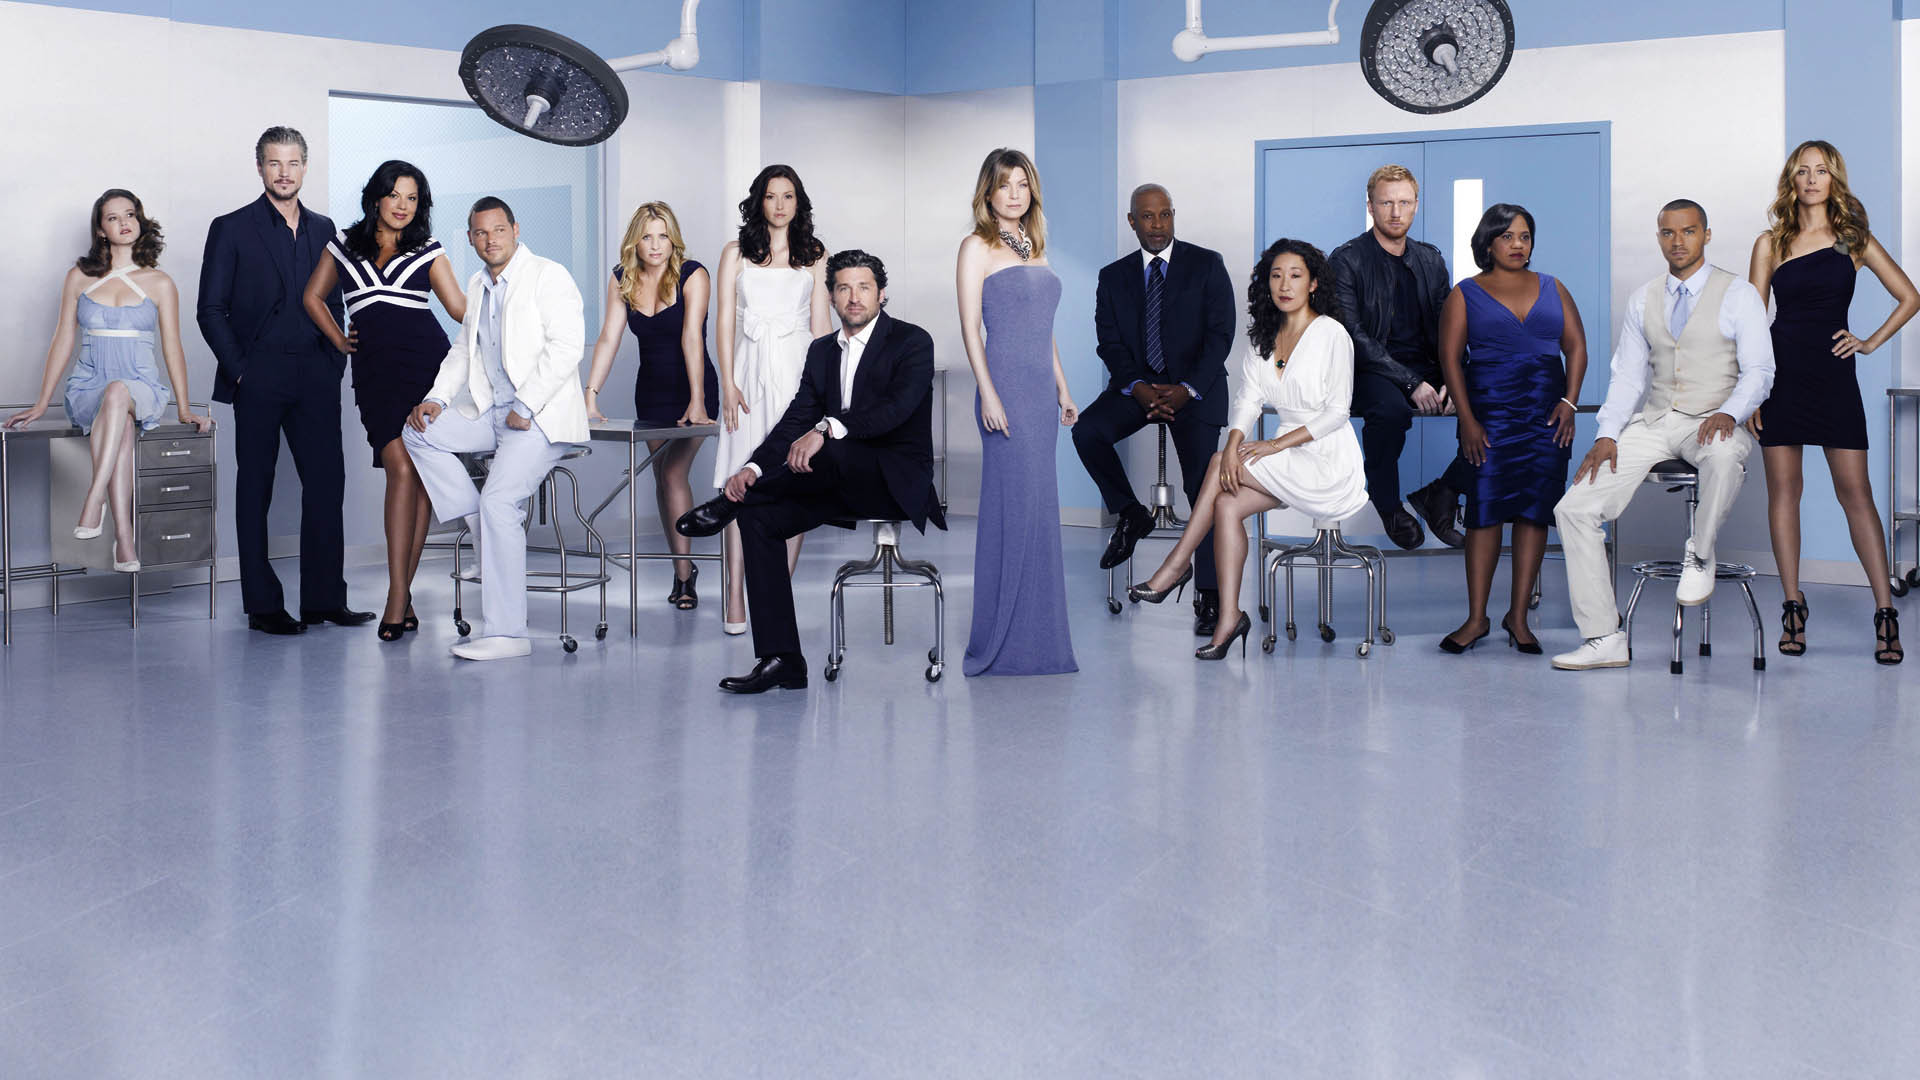 TV Show Grey's Anatomy HD Wallpaper | Background Image